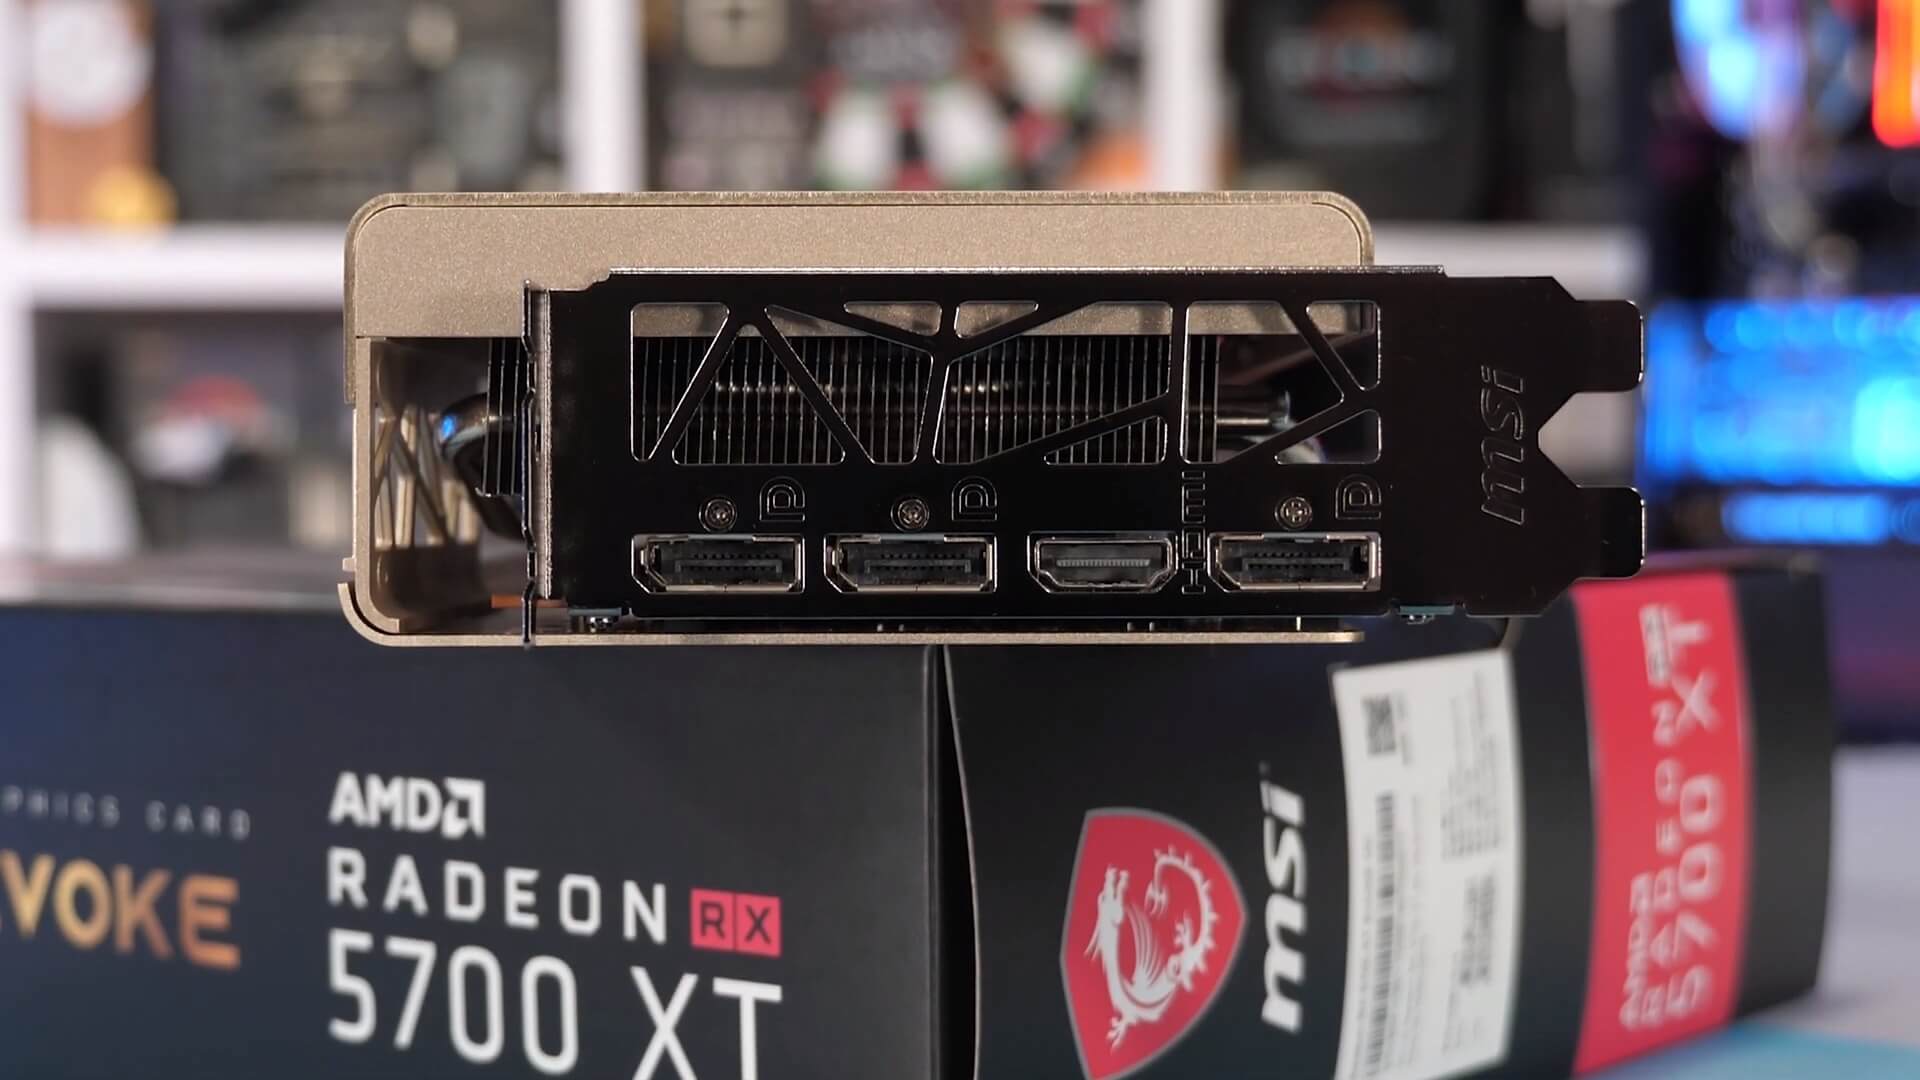 MSI Radeon RX 5700 XT Evoke OC Review Photo Gallery - TechSpot